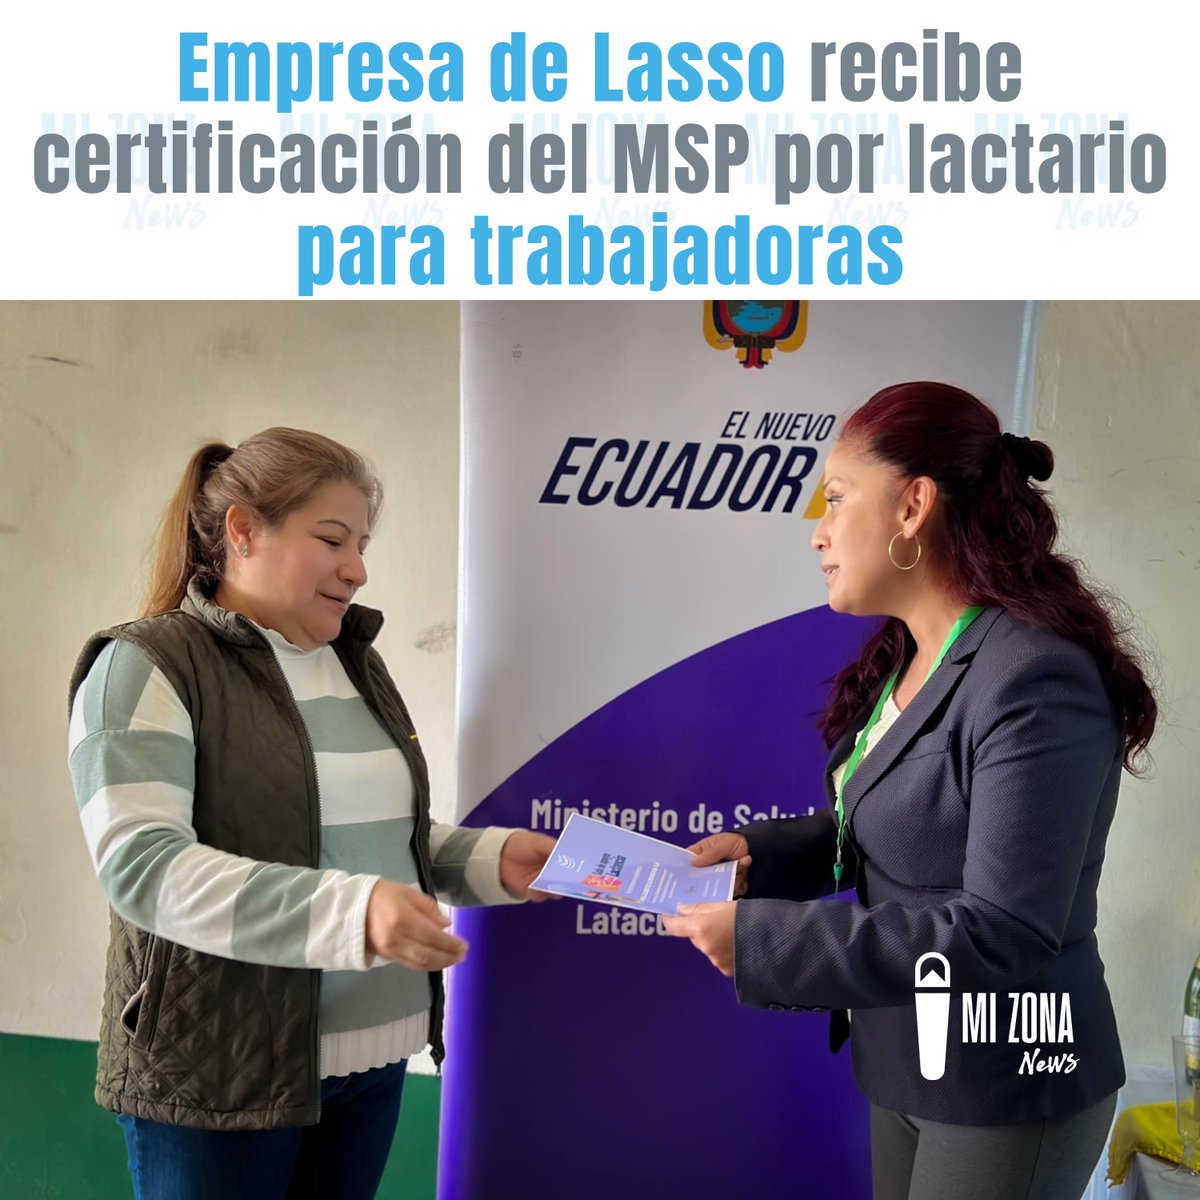 La Dirección Distrital de Salud de Latacunga entregó este martes certificación oficial a la empresa Nova Alimentos por su Sala de Apoyo a la Lactancia Materna. #Lasso #Tanicuchí #LatacungaRural #Latacunga  👇

facebook.com/share/p/uGw7aZ…